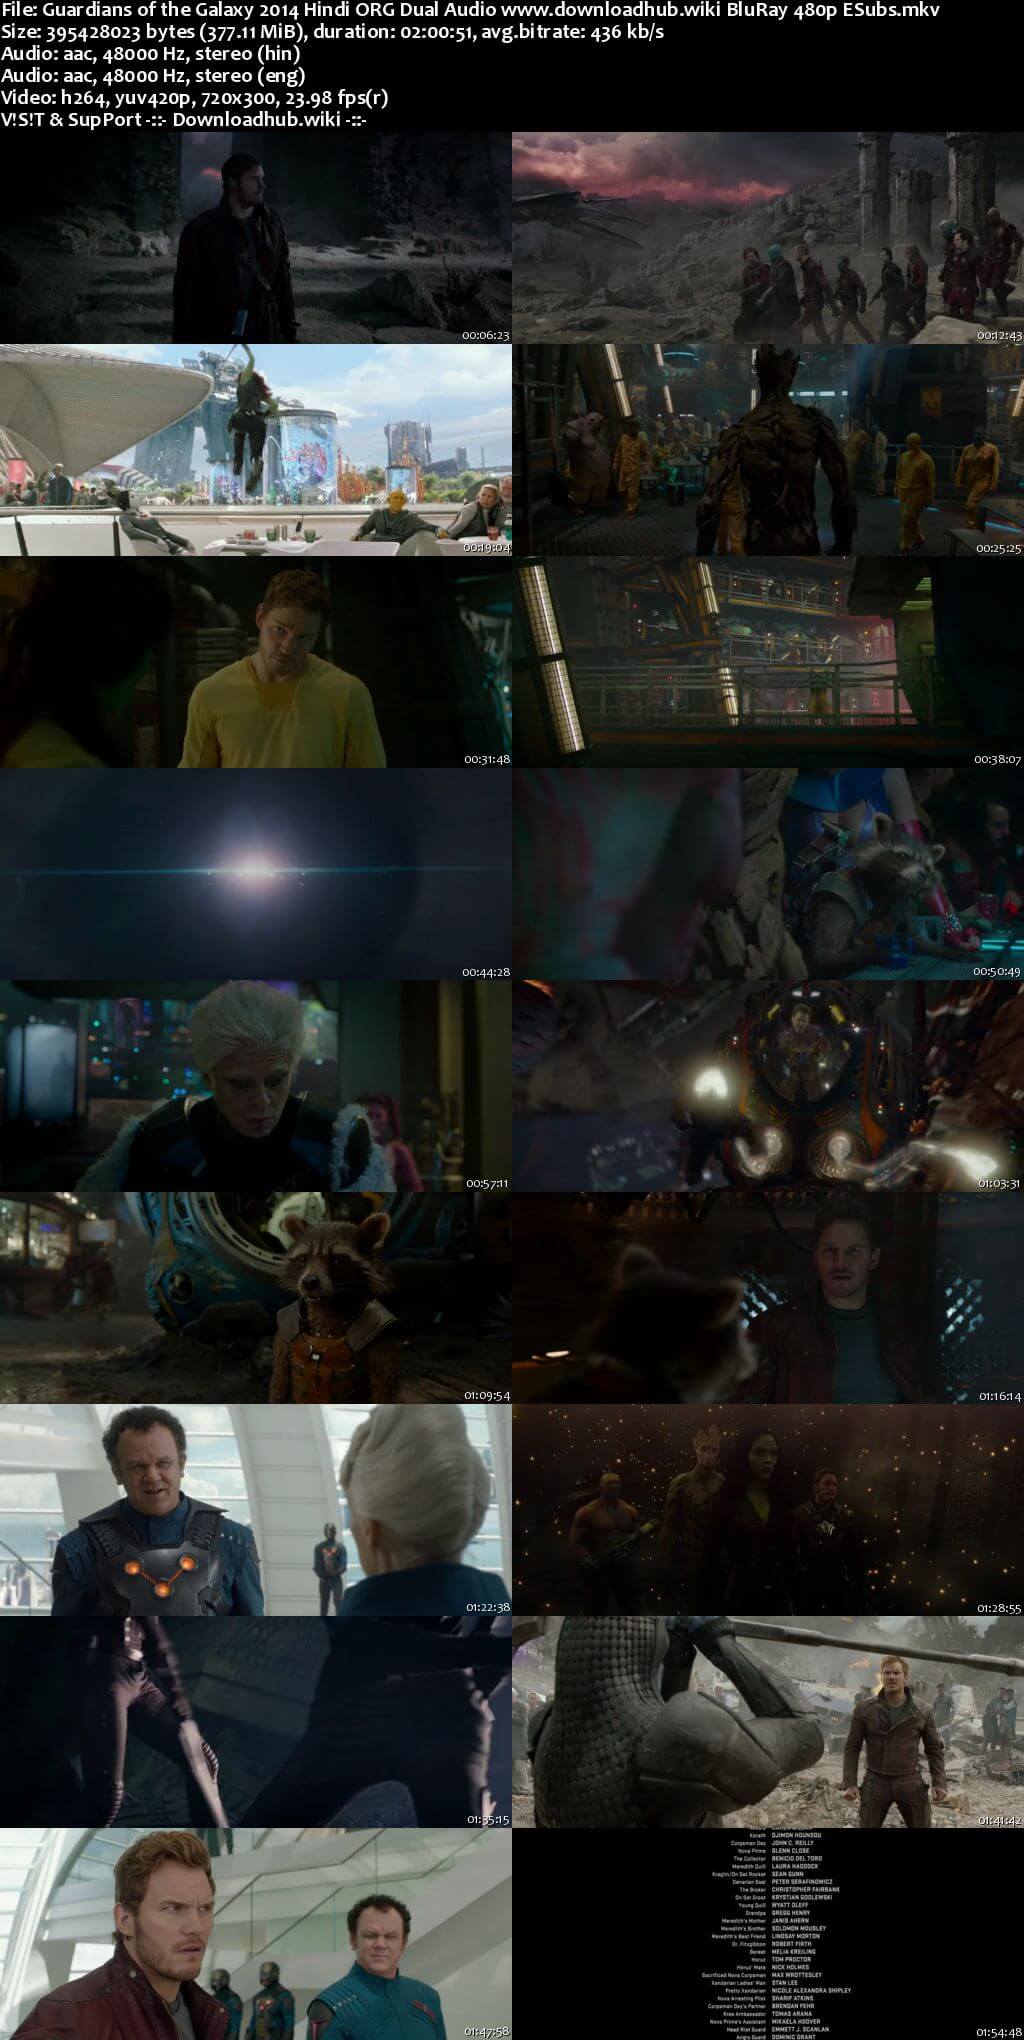 Guardians of the Galaxy 2014 Hindi ORG Dual Audio 350MB BluRay 480p ESubs